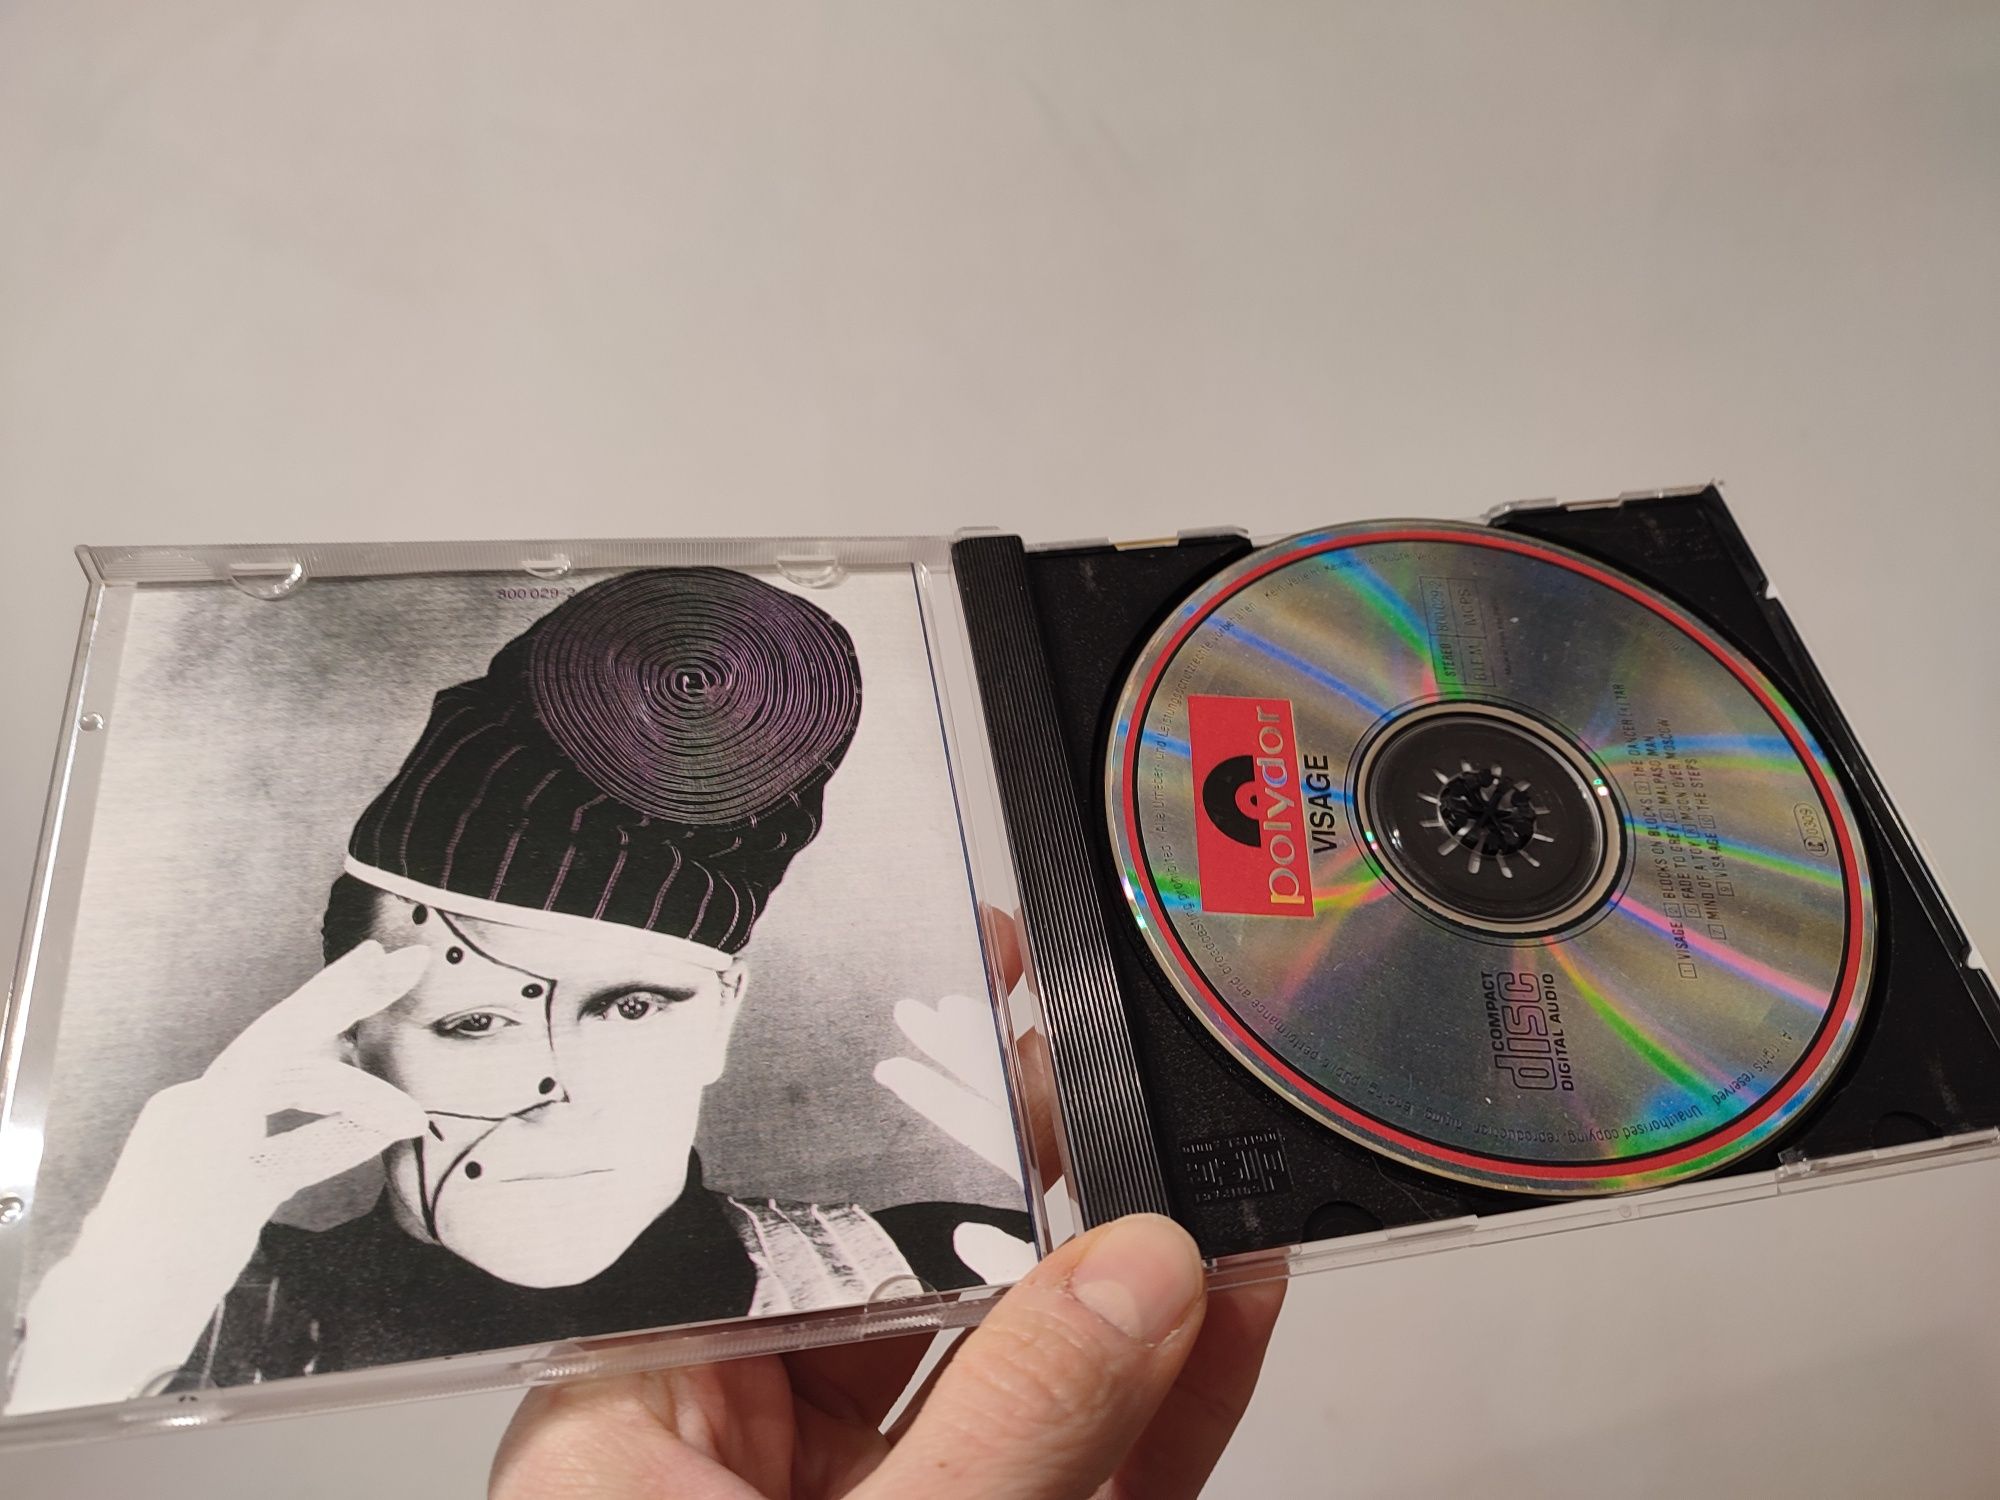 Visage - płyta CD .